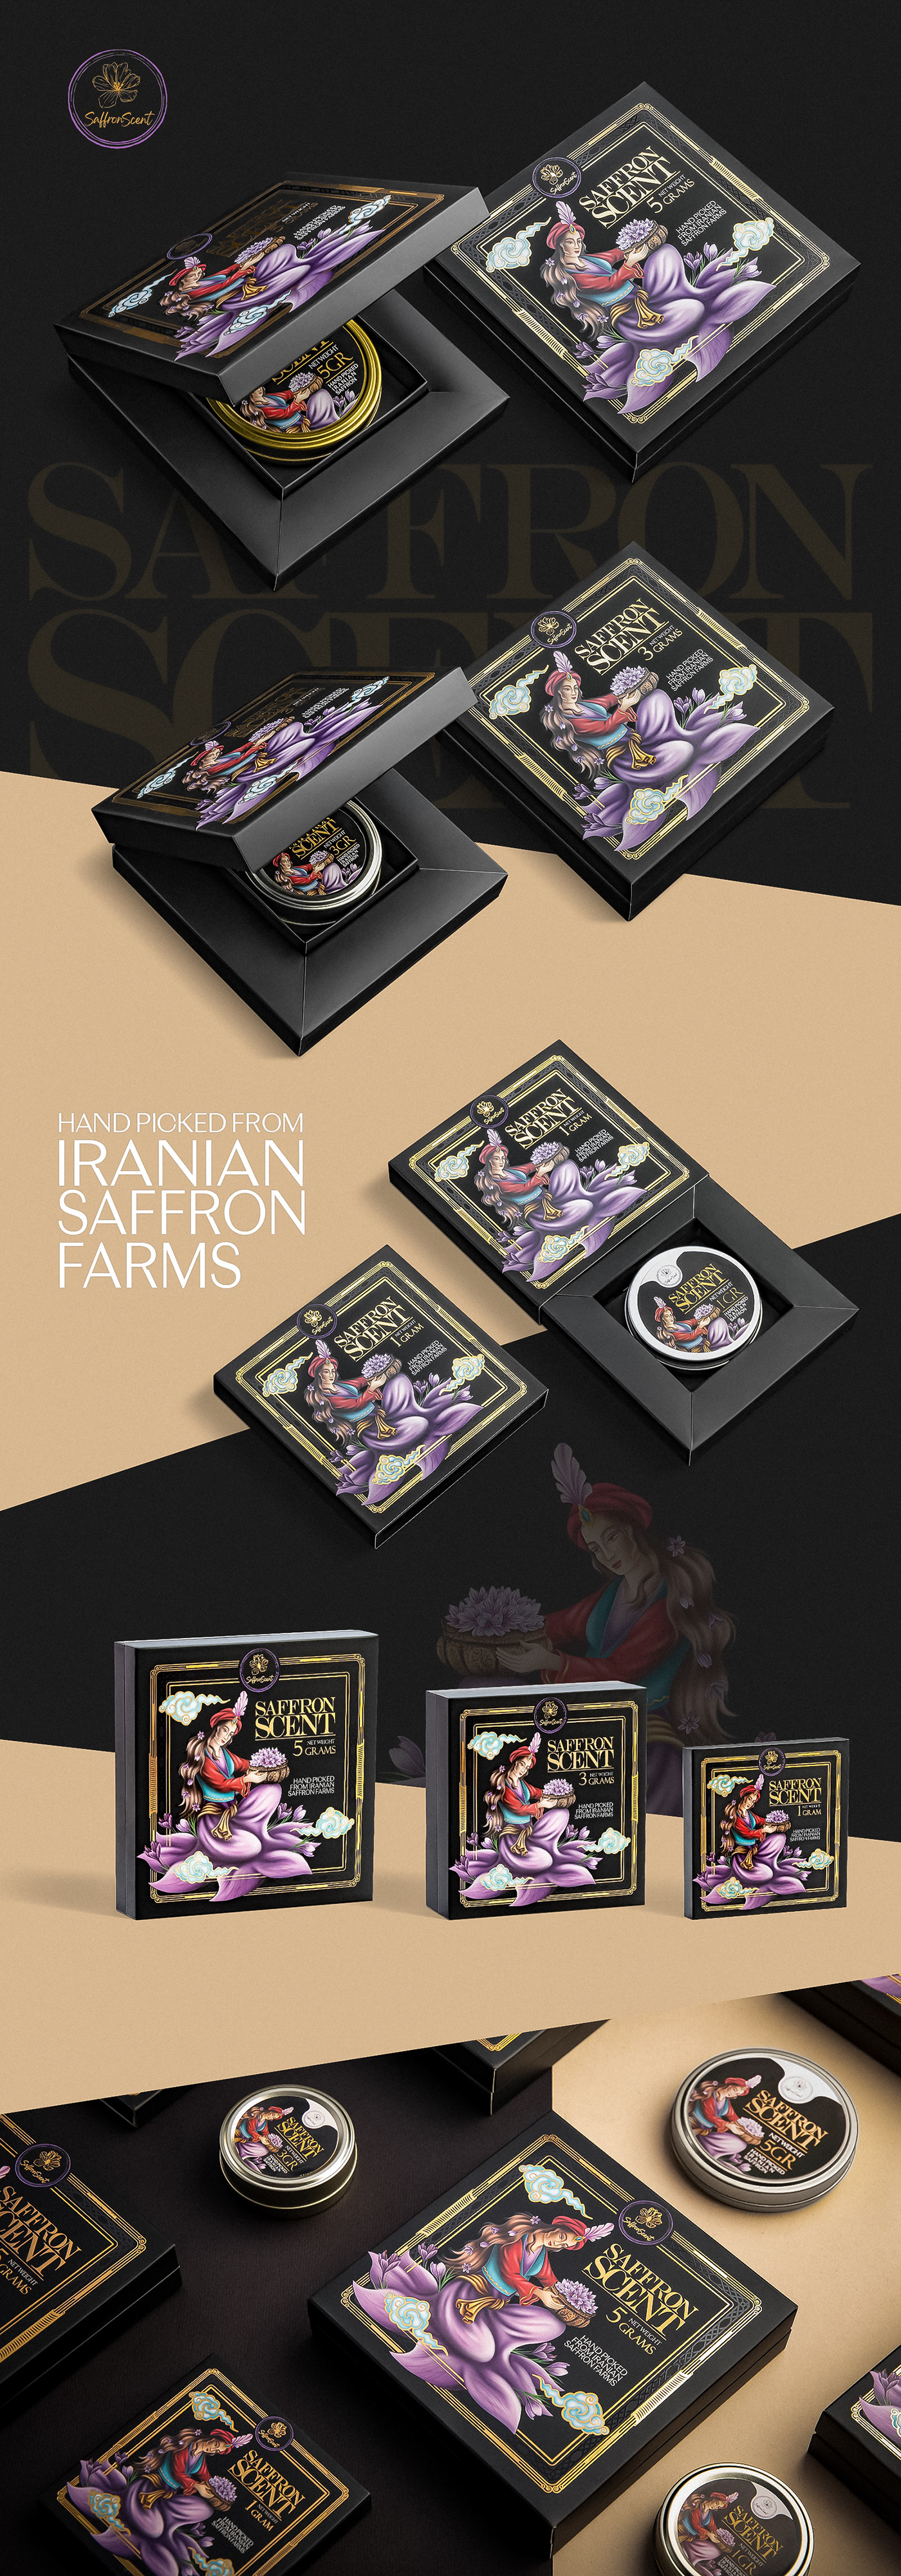 saffron Packaging gift Iran persian ILLUSTRATION  hotfoil branding  luxury box